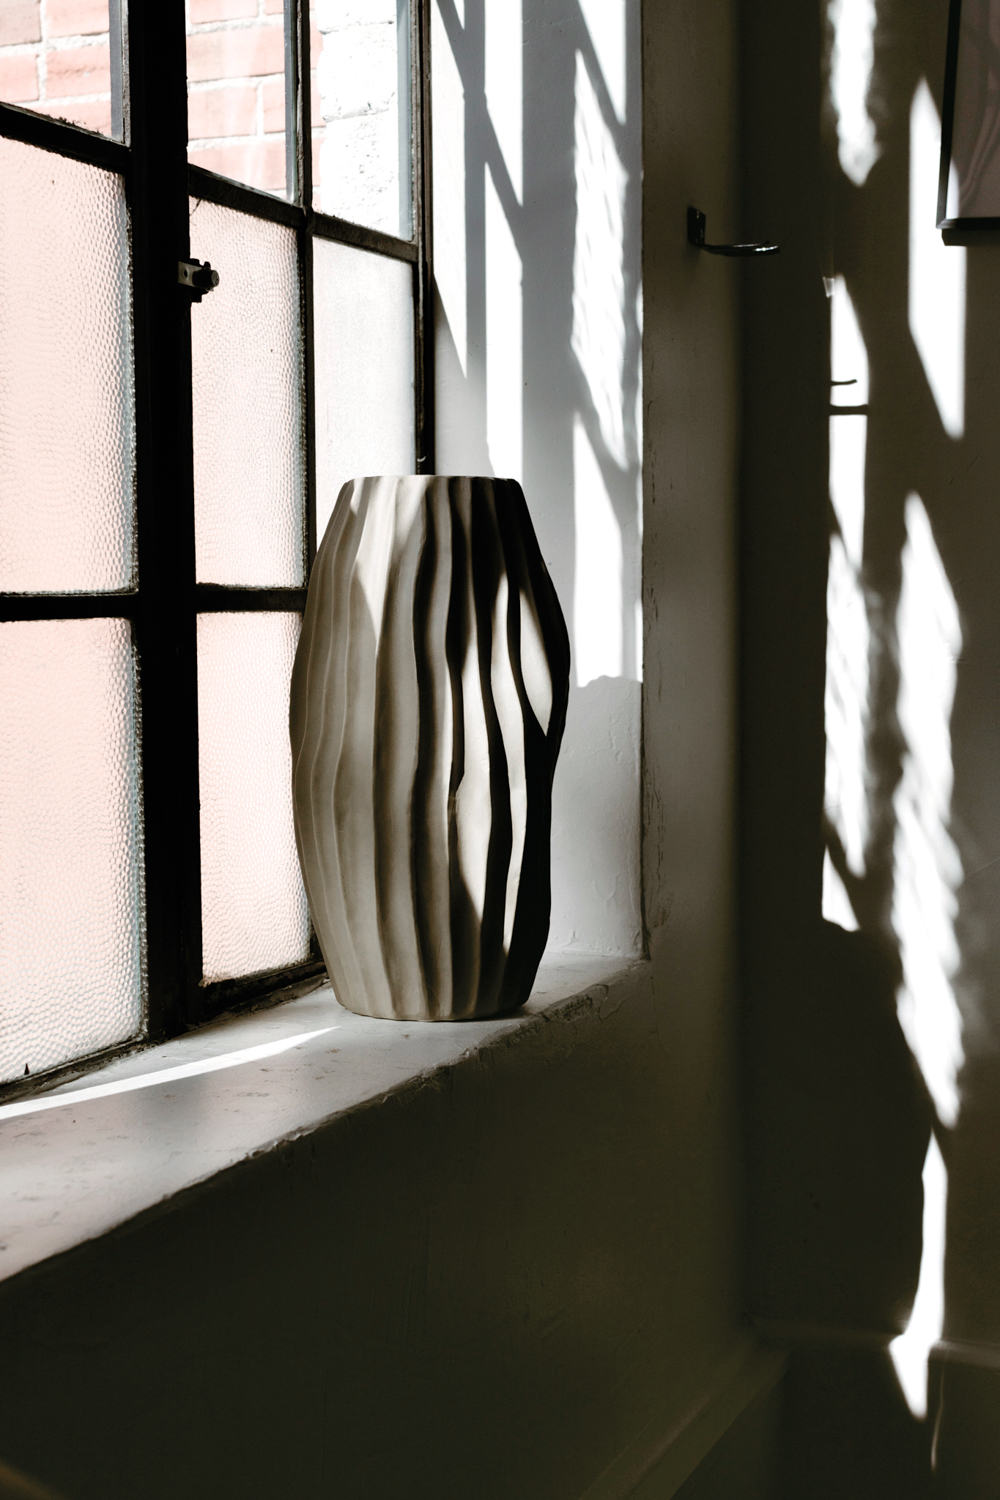 A textured ceramic vase on a windowsill.